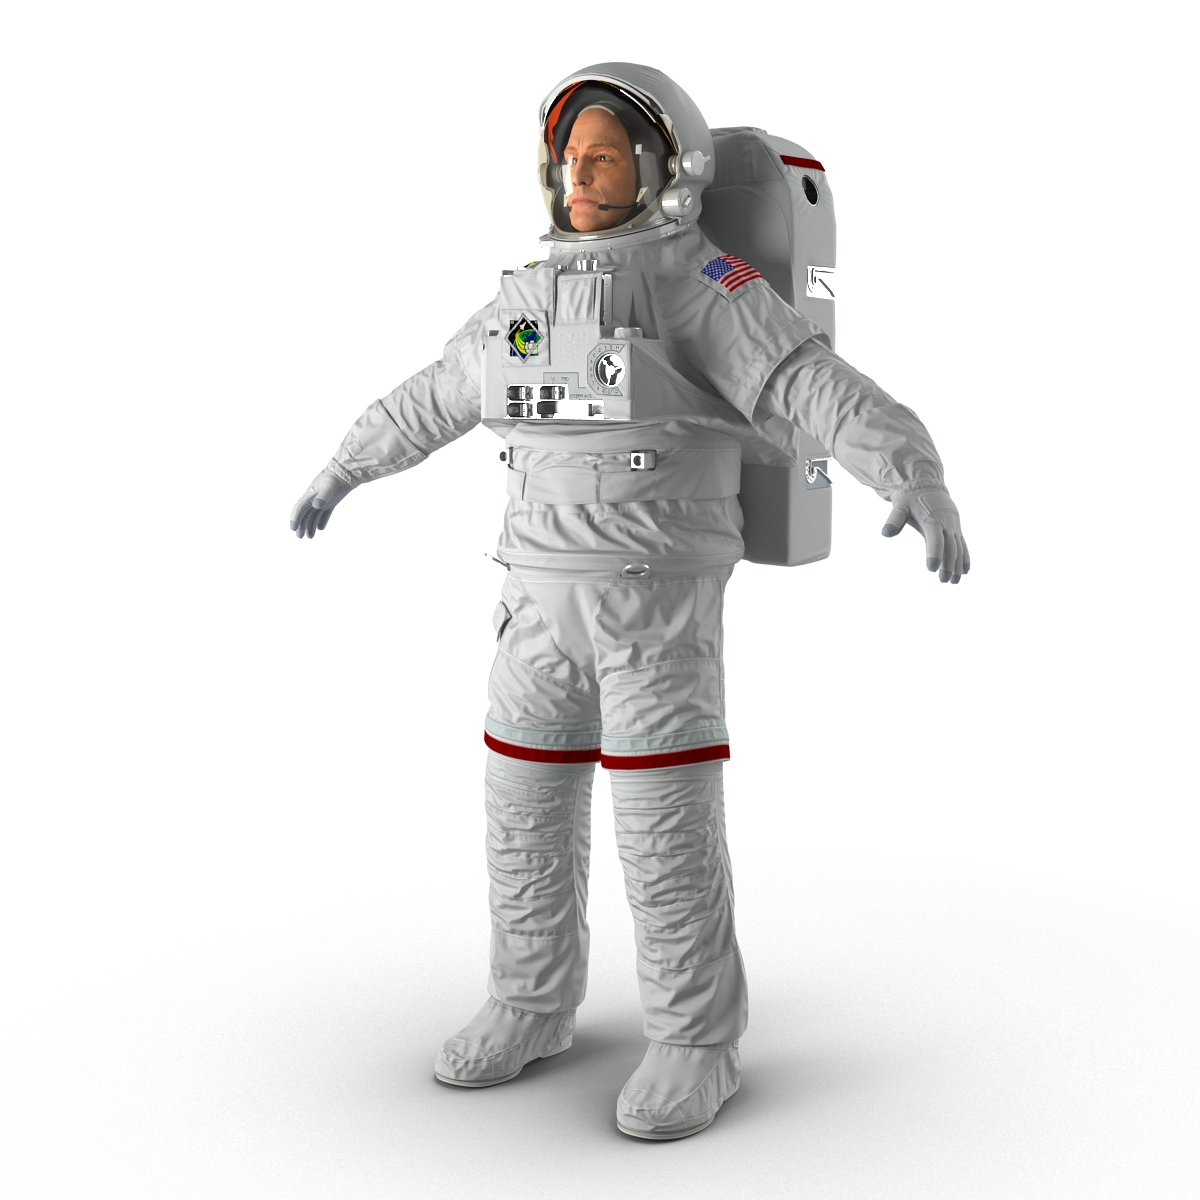 3d model of astronaut nasa extravehicular mobility